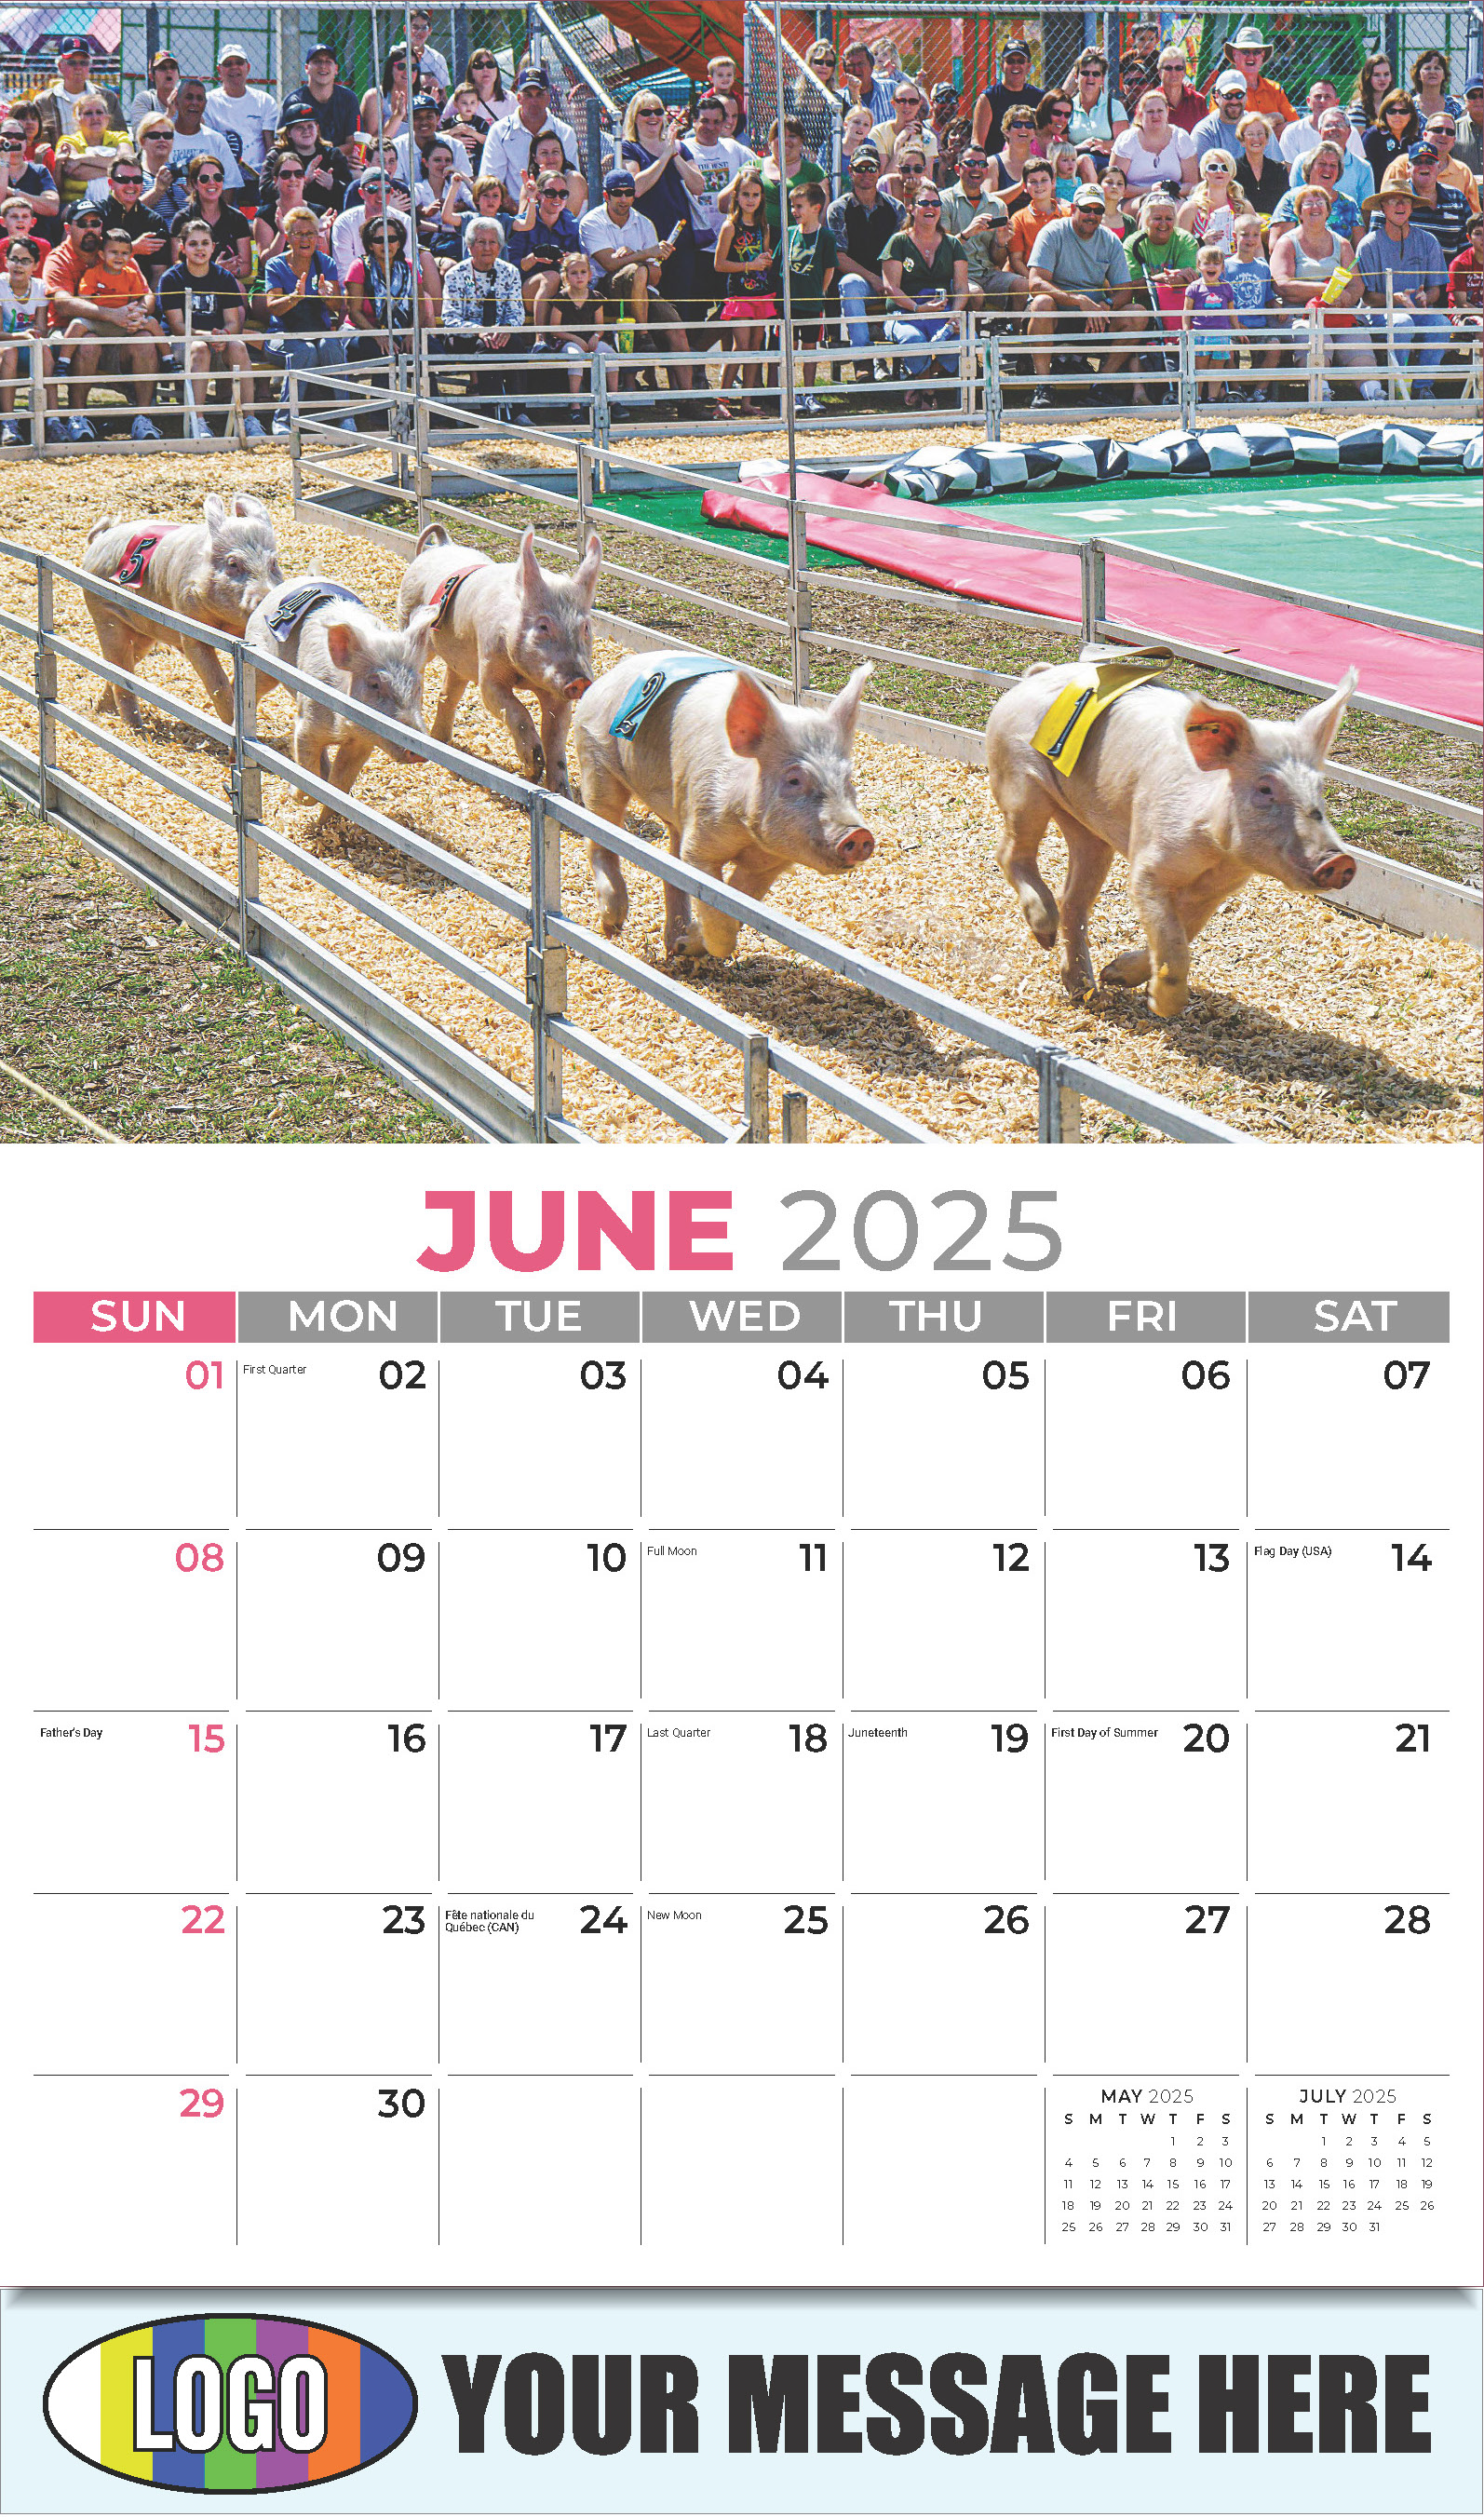 Country Spirit 2025 Business Advertising Calendar - June